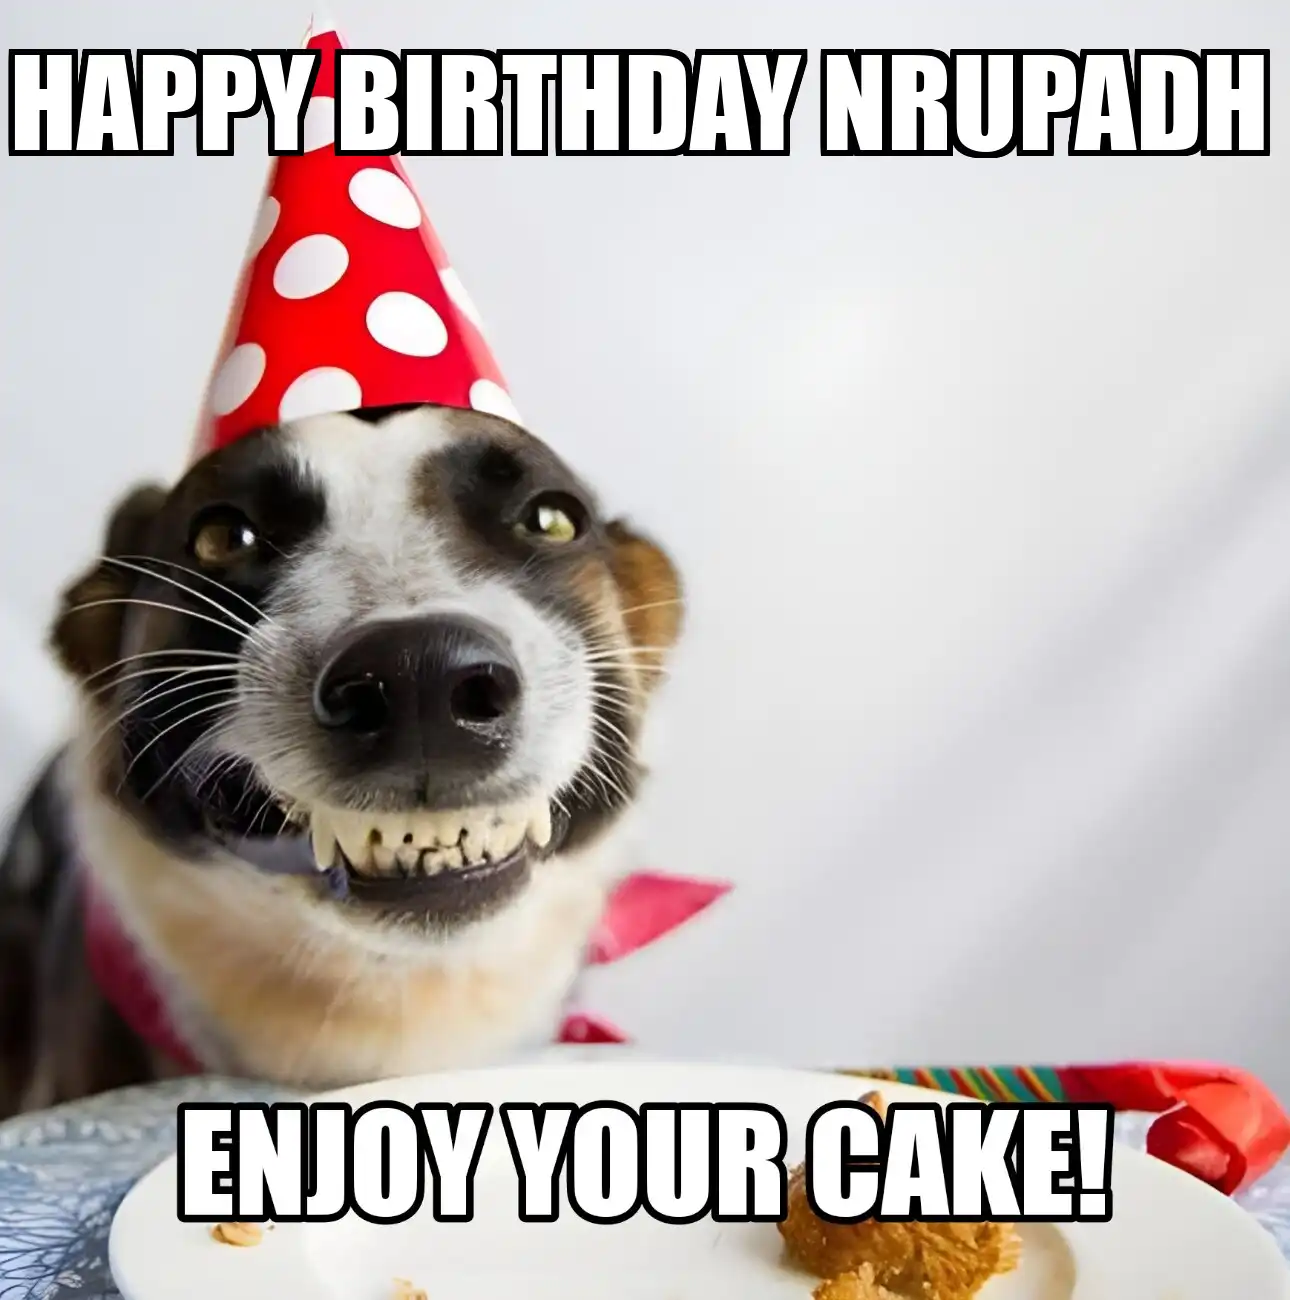 Happy Birthday Nrupadh Enjoy Your Cake Dog Meme